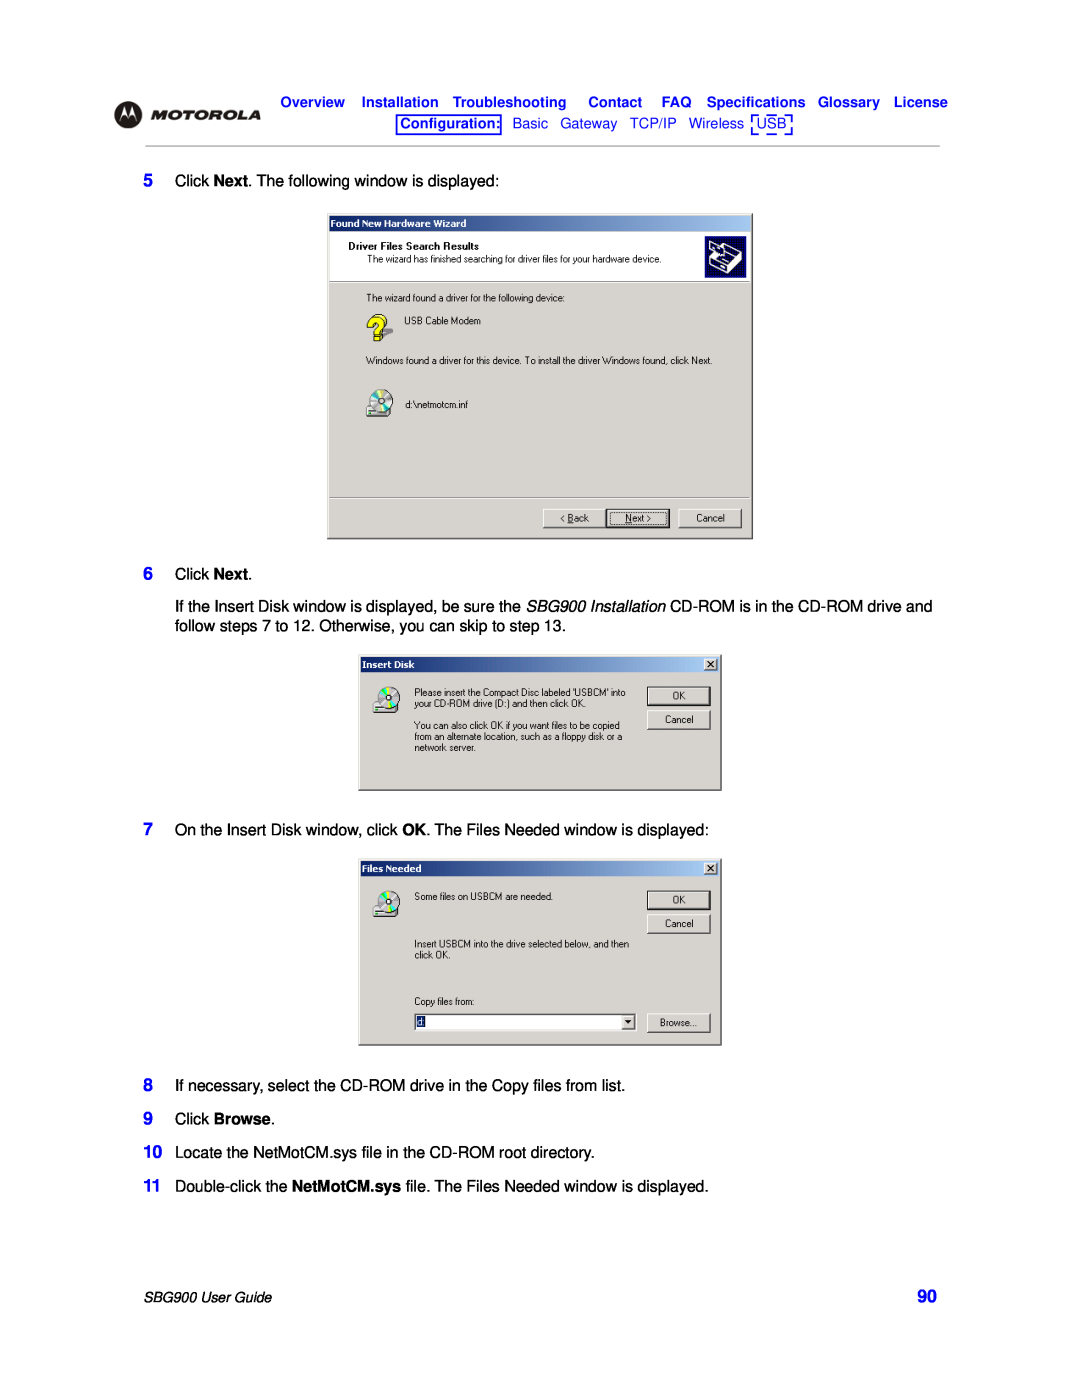 Motorola SBG900 manual Click Next. The following window is displayed 6 Click Next 